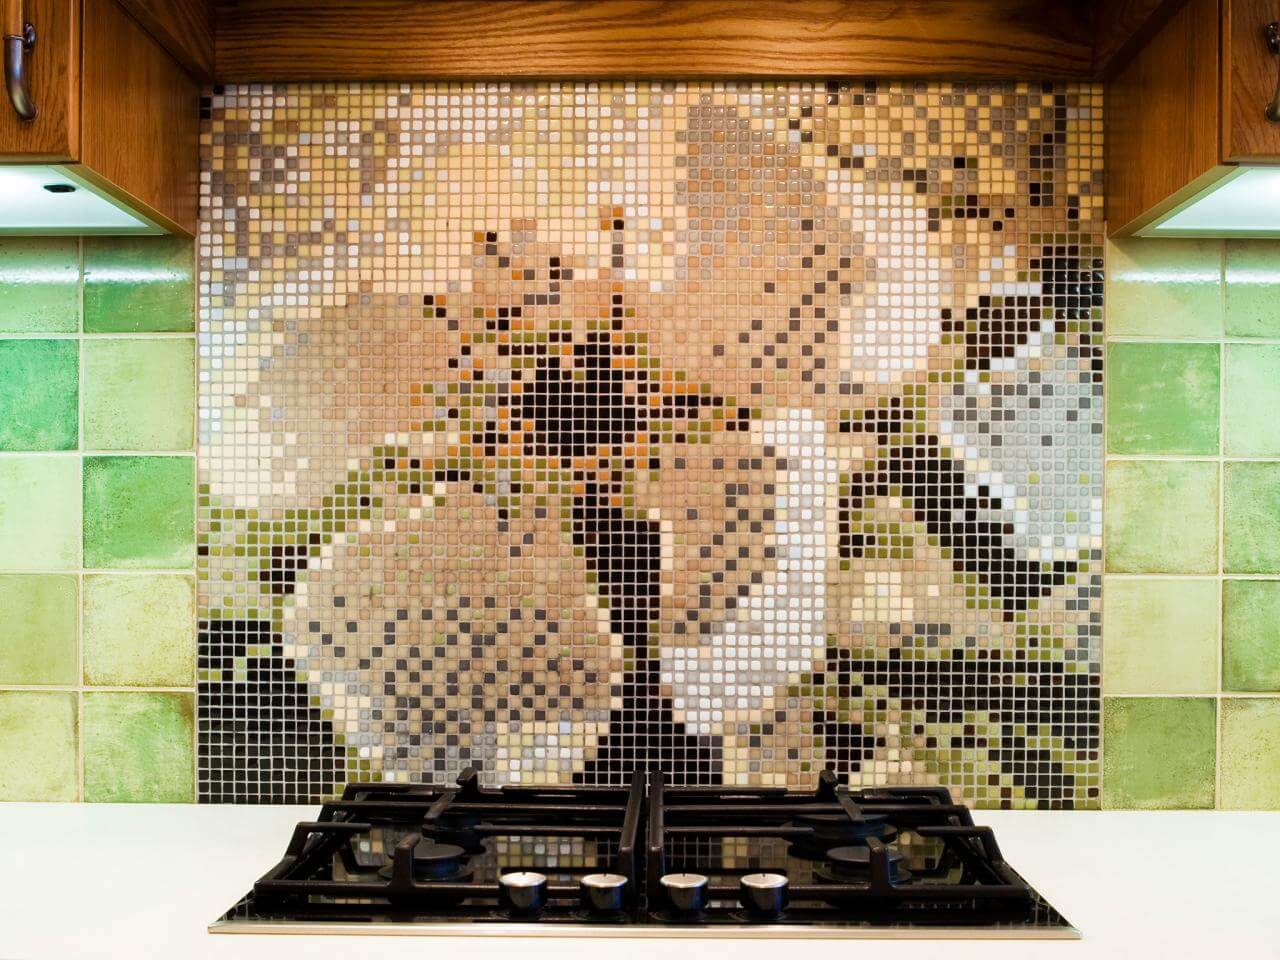 Super Cool Mosaic Kitchen Backsplash